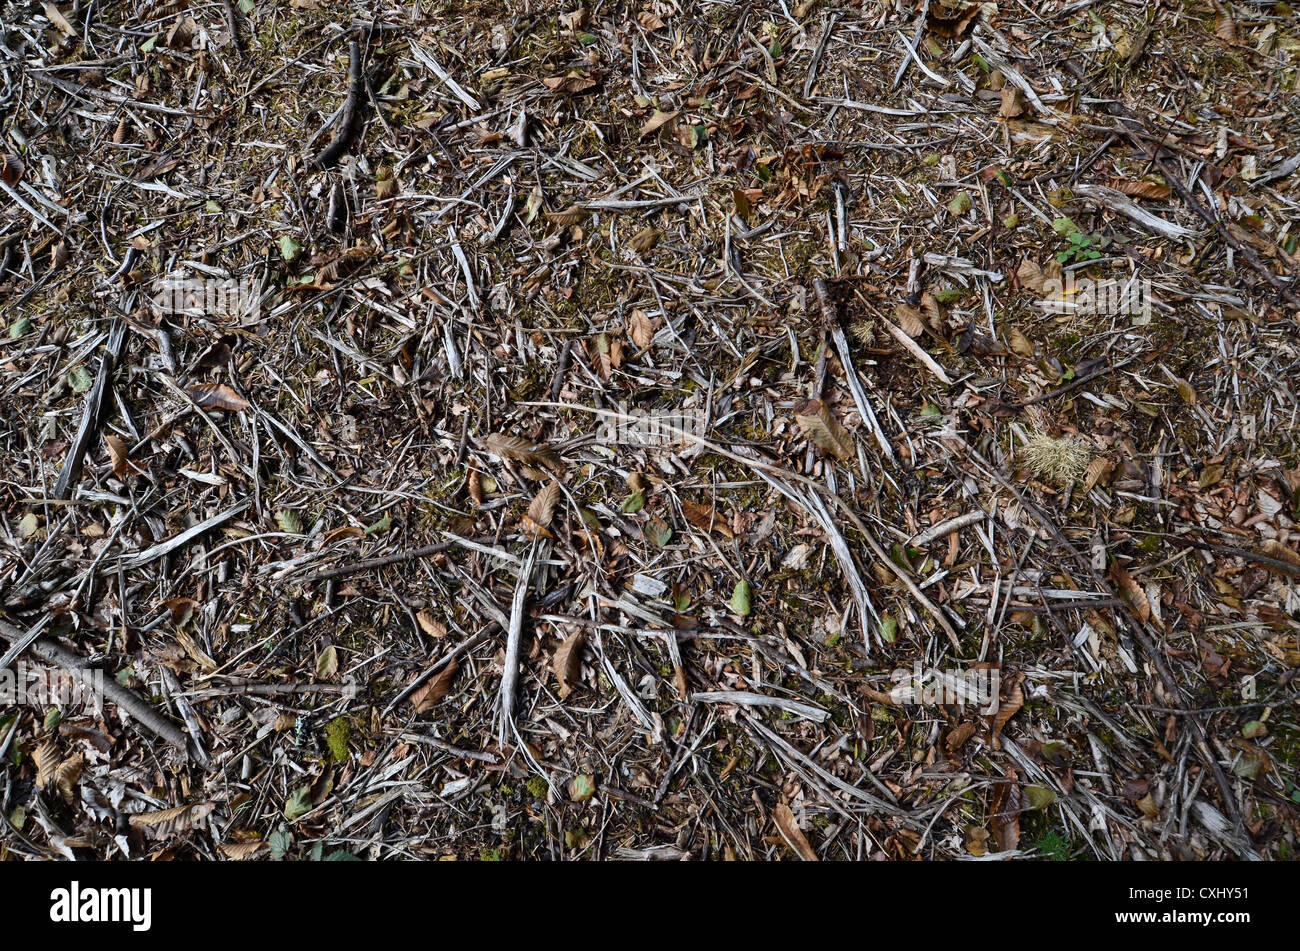 Woodland leaf and twig debris Stock Photo - Alamy